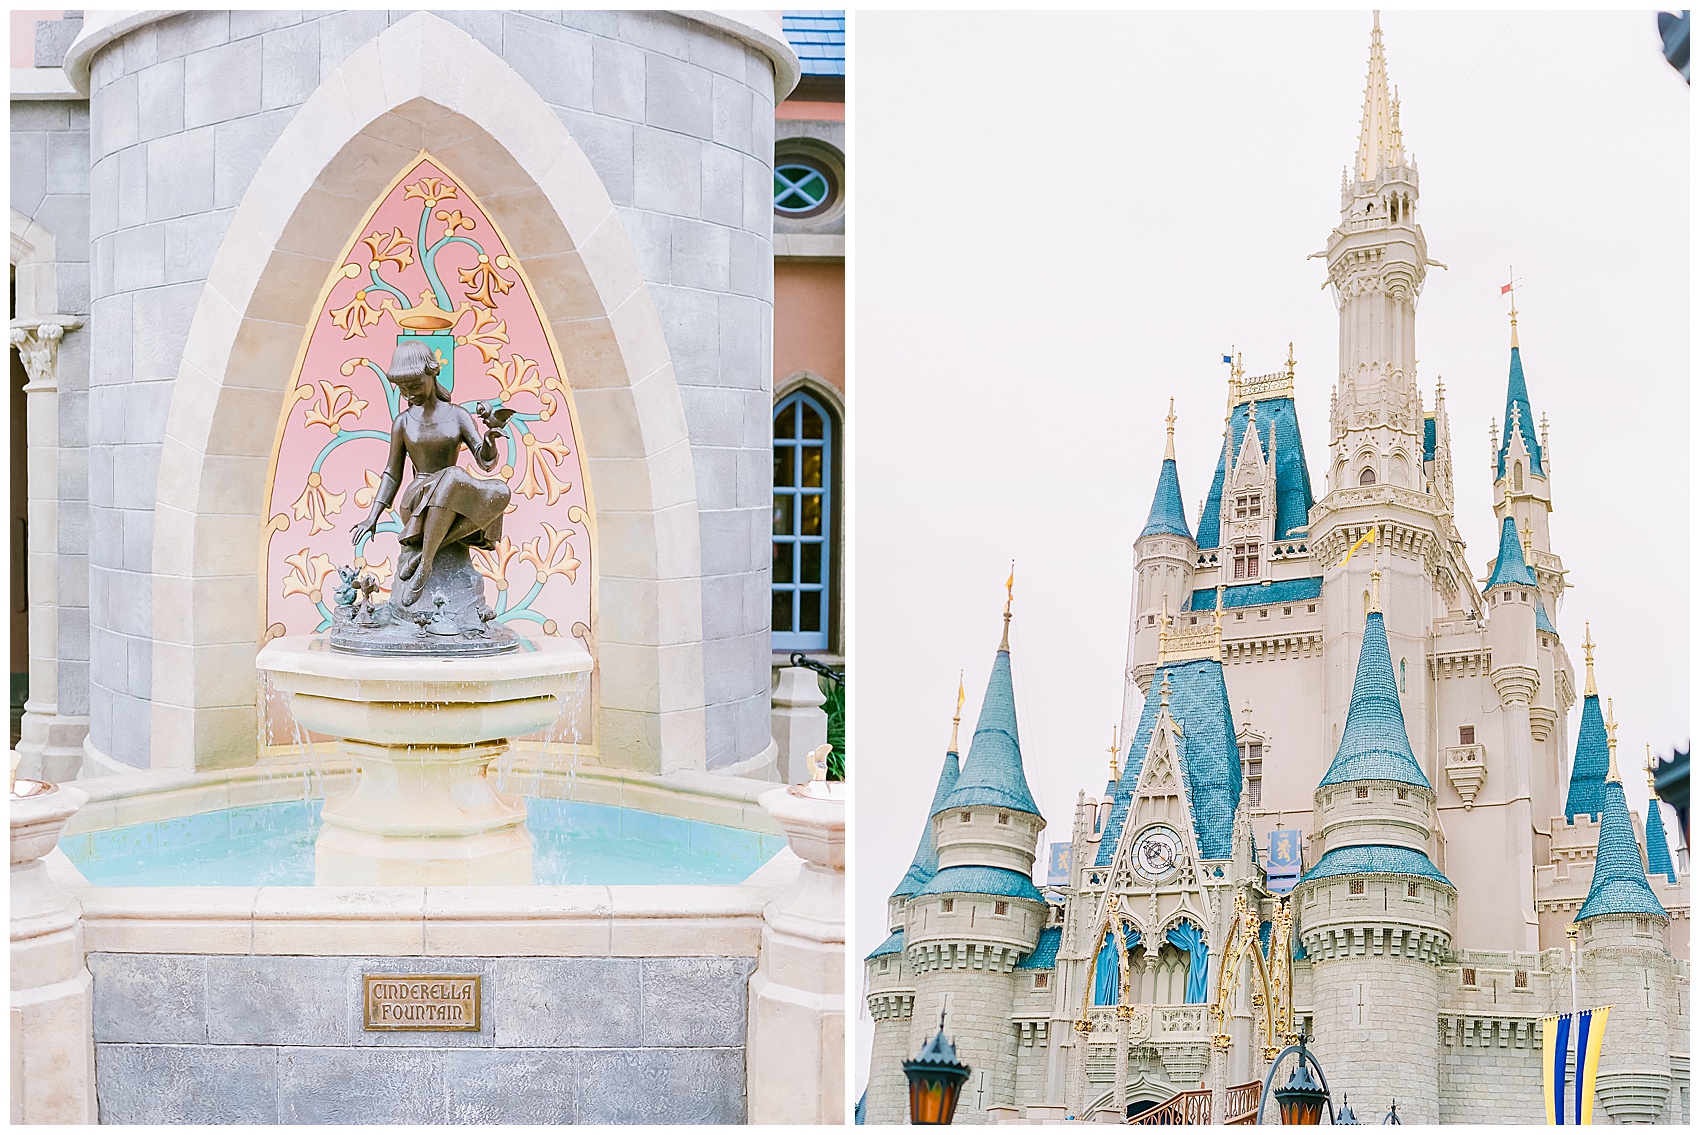 Cinderella's foutain at DisneyWorld | Disney wedding photographer